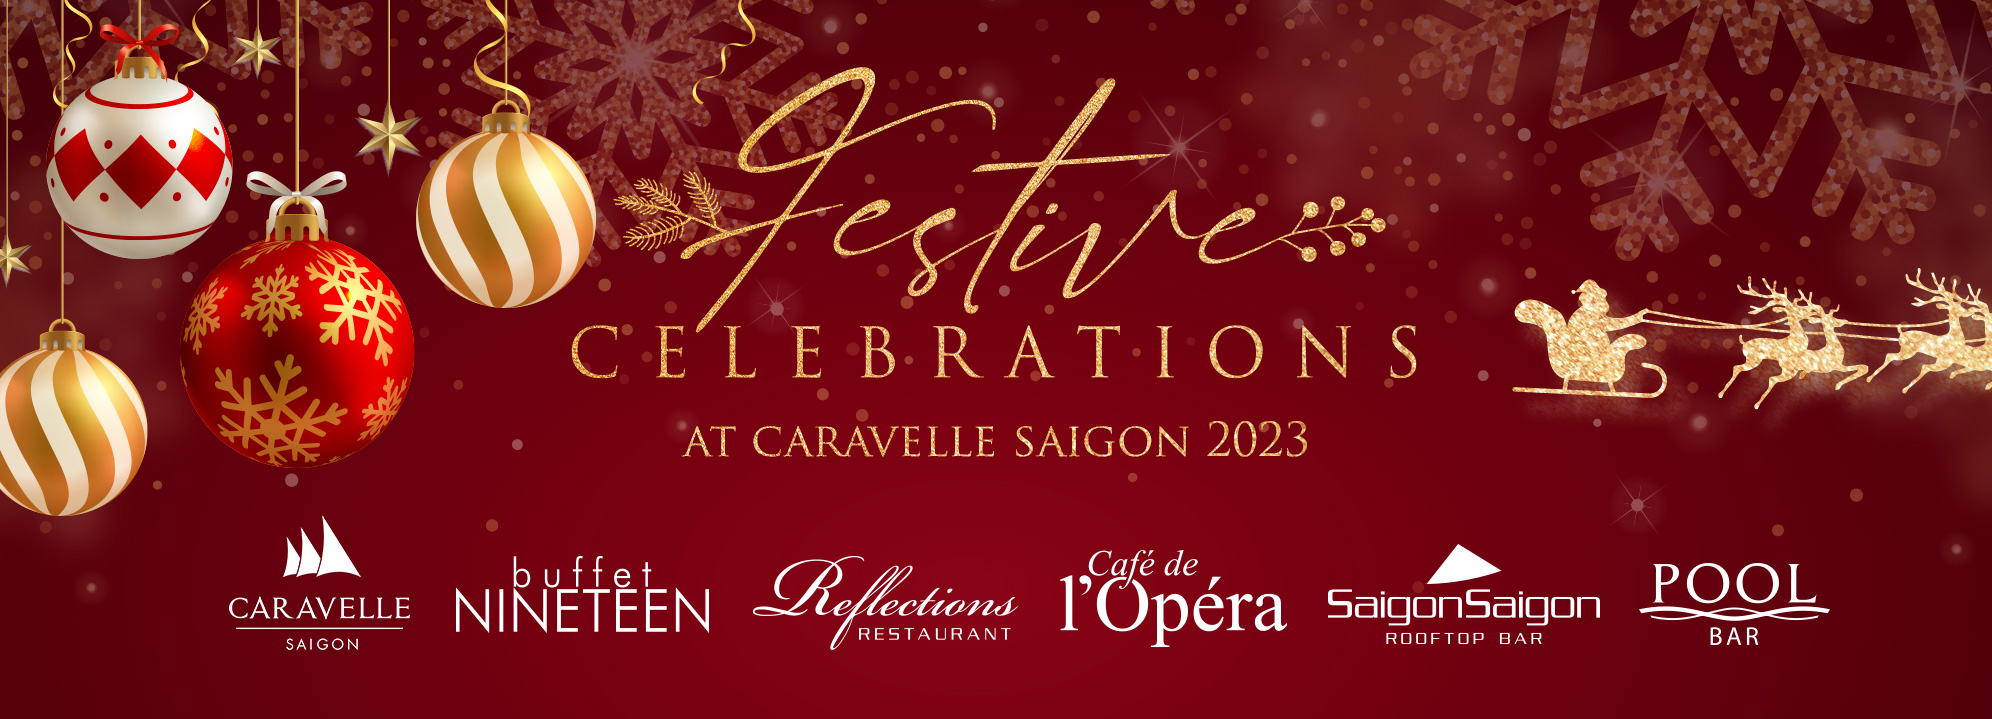 Festive-Celebrations-at-Caravelle-2022-2023